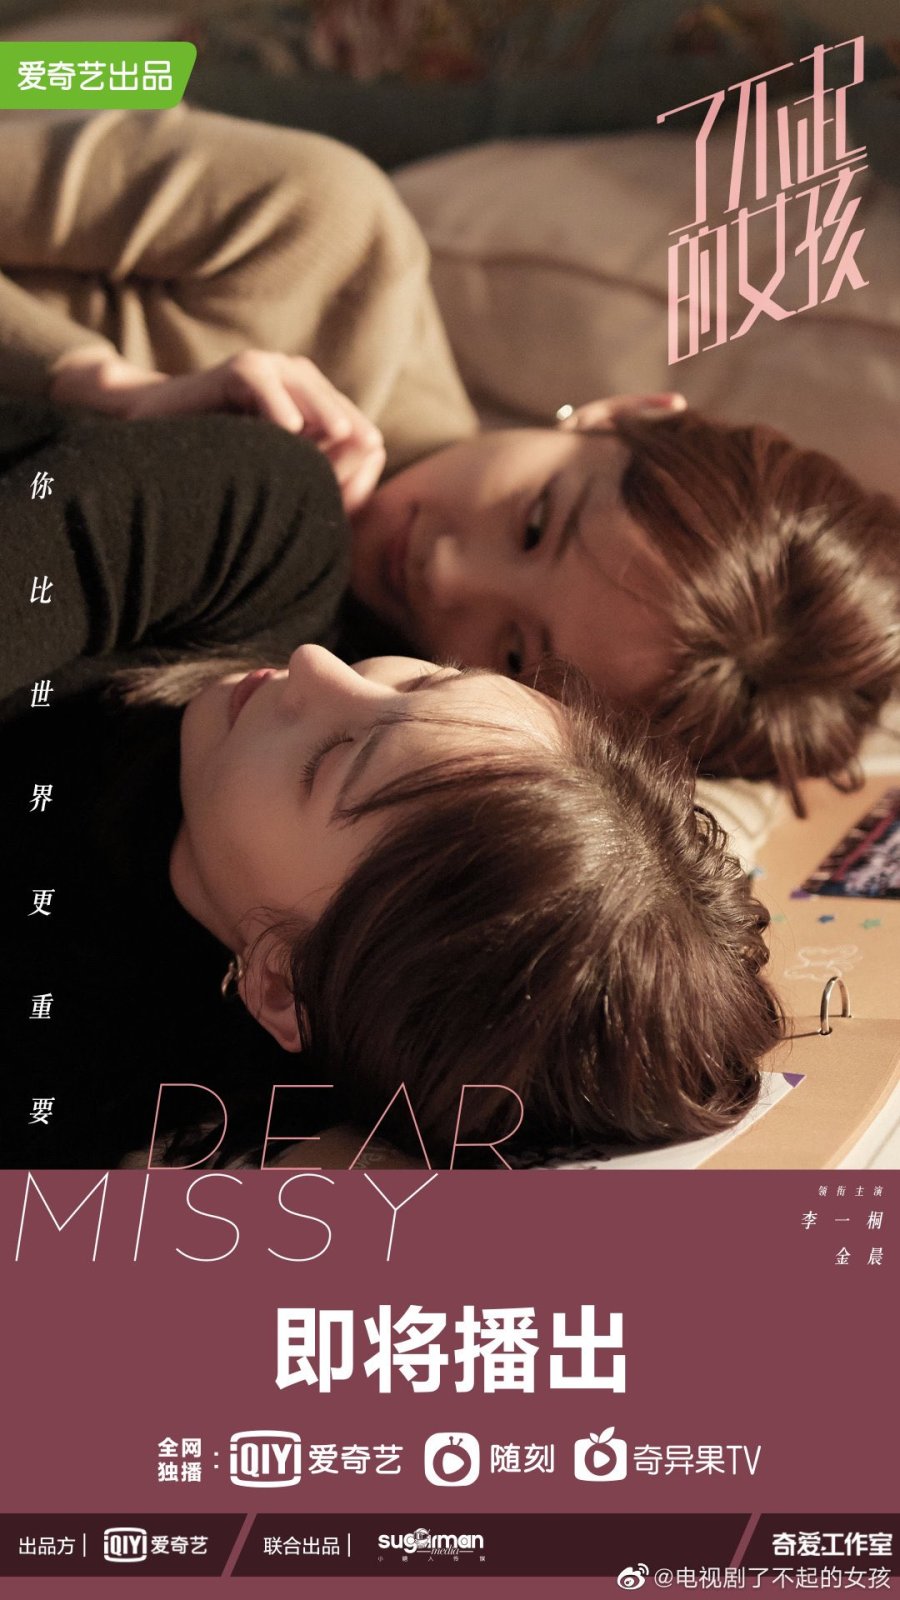 image poster from imdb - ​Dear Missy (2020)